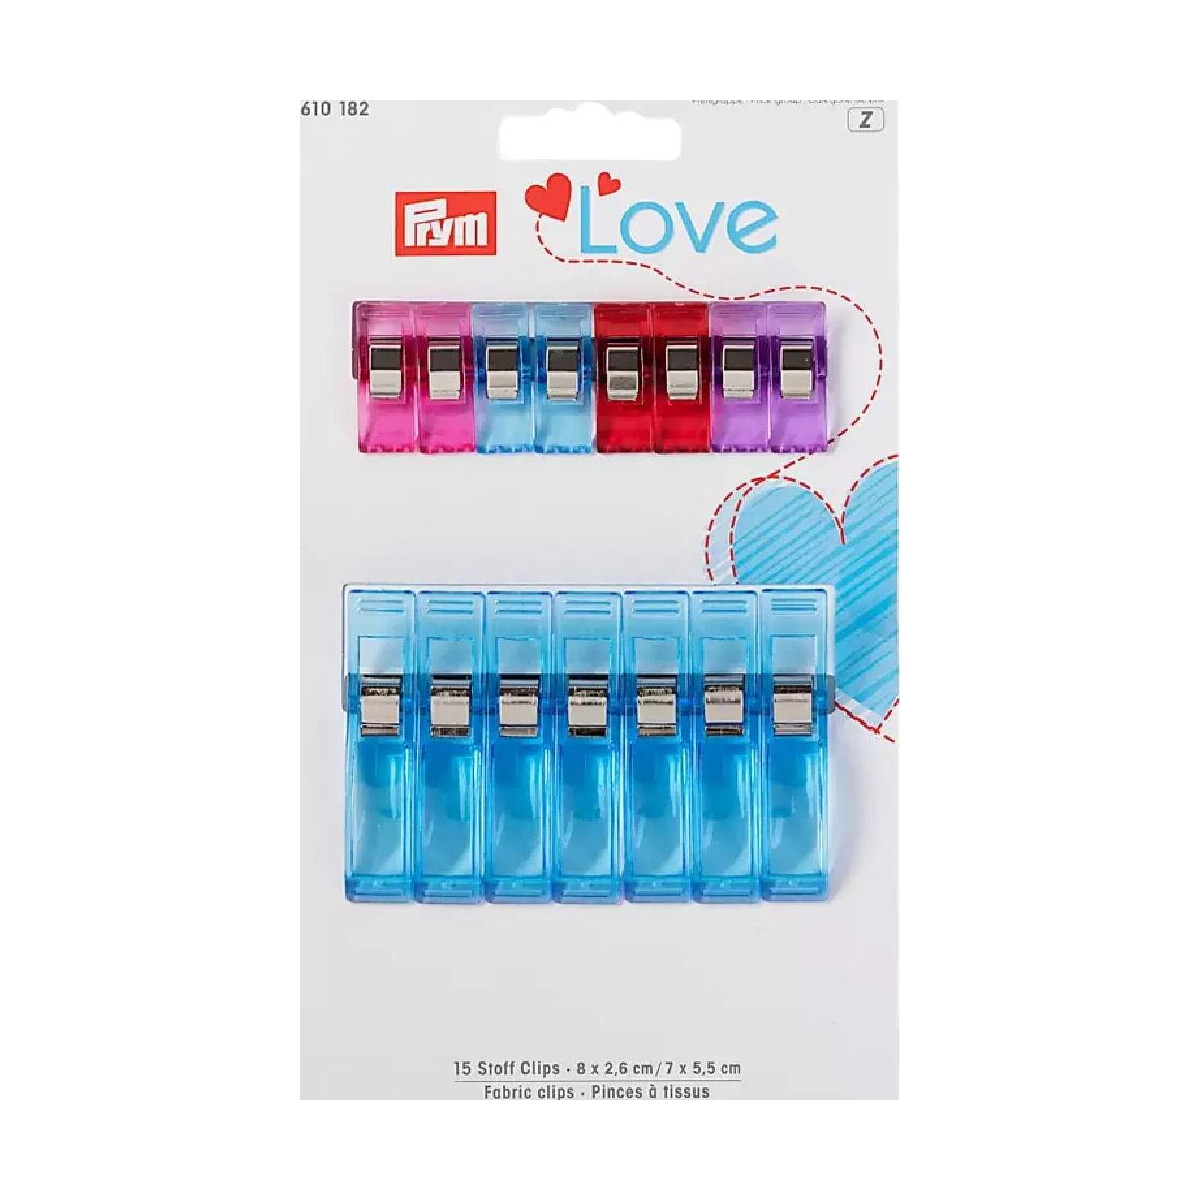 Prym Love Fabric clips 2.6cm and 5.5cm, 15 pcs